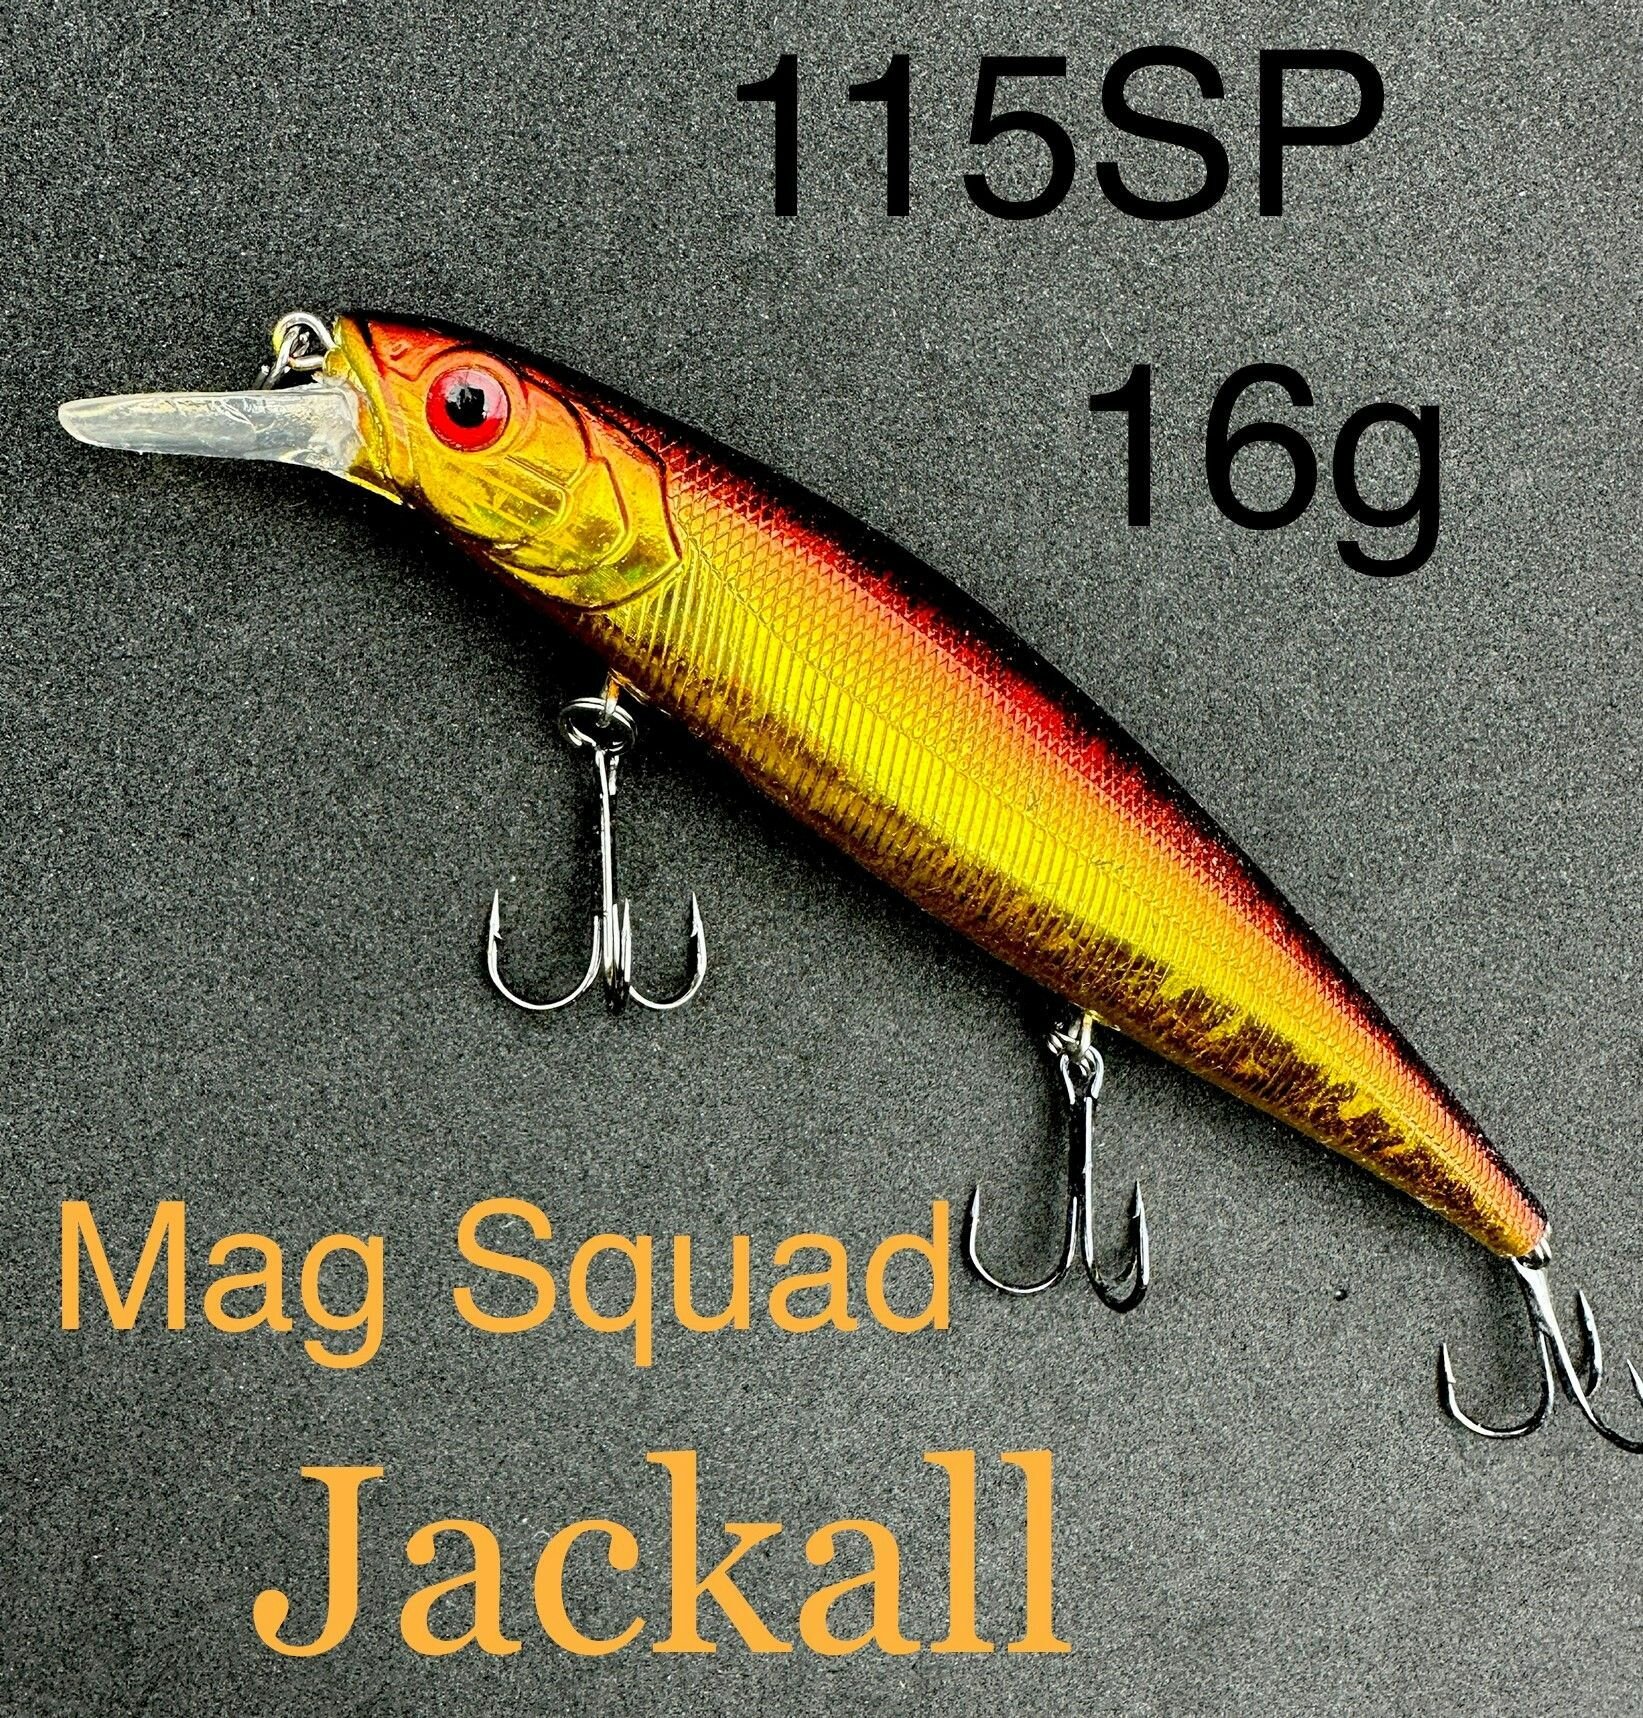 Воблеh Jackall Mag Squad 115SP 16 g Jerk bait 16g Япония на окуня, щуку, судака, бурш, лосось